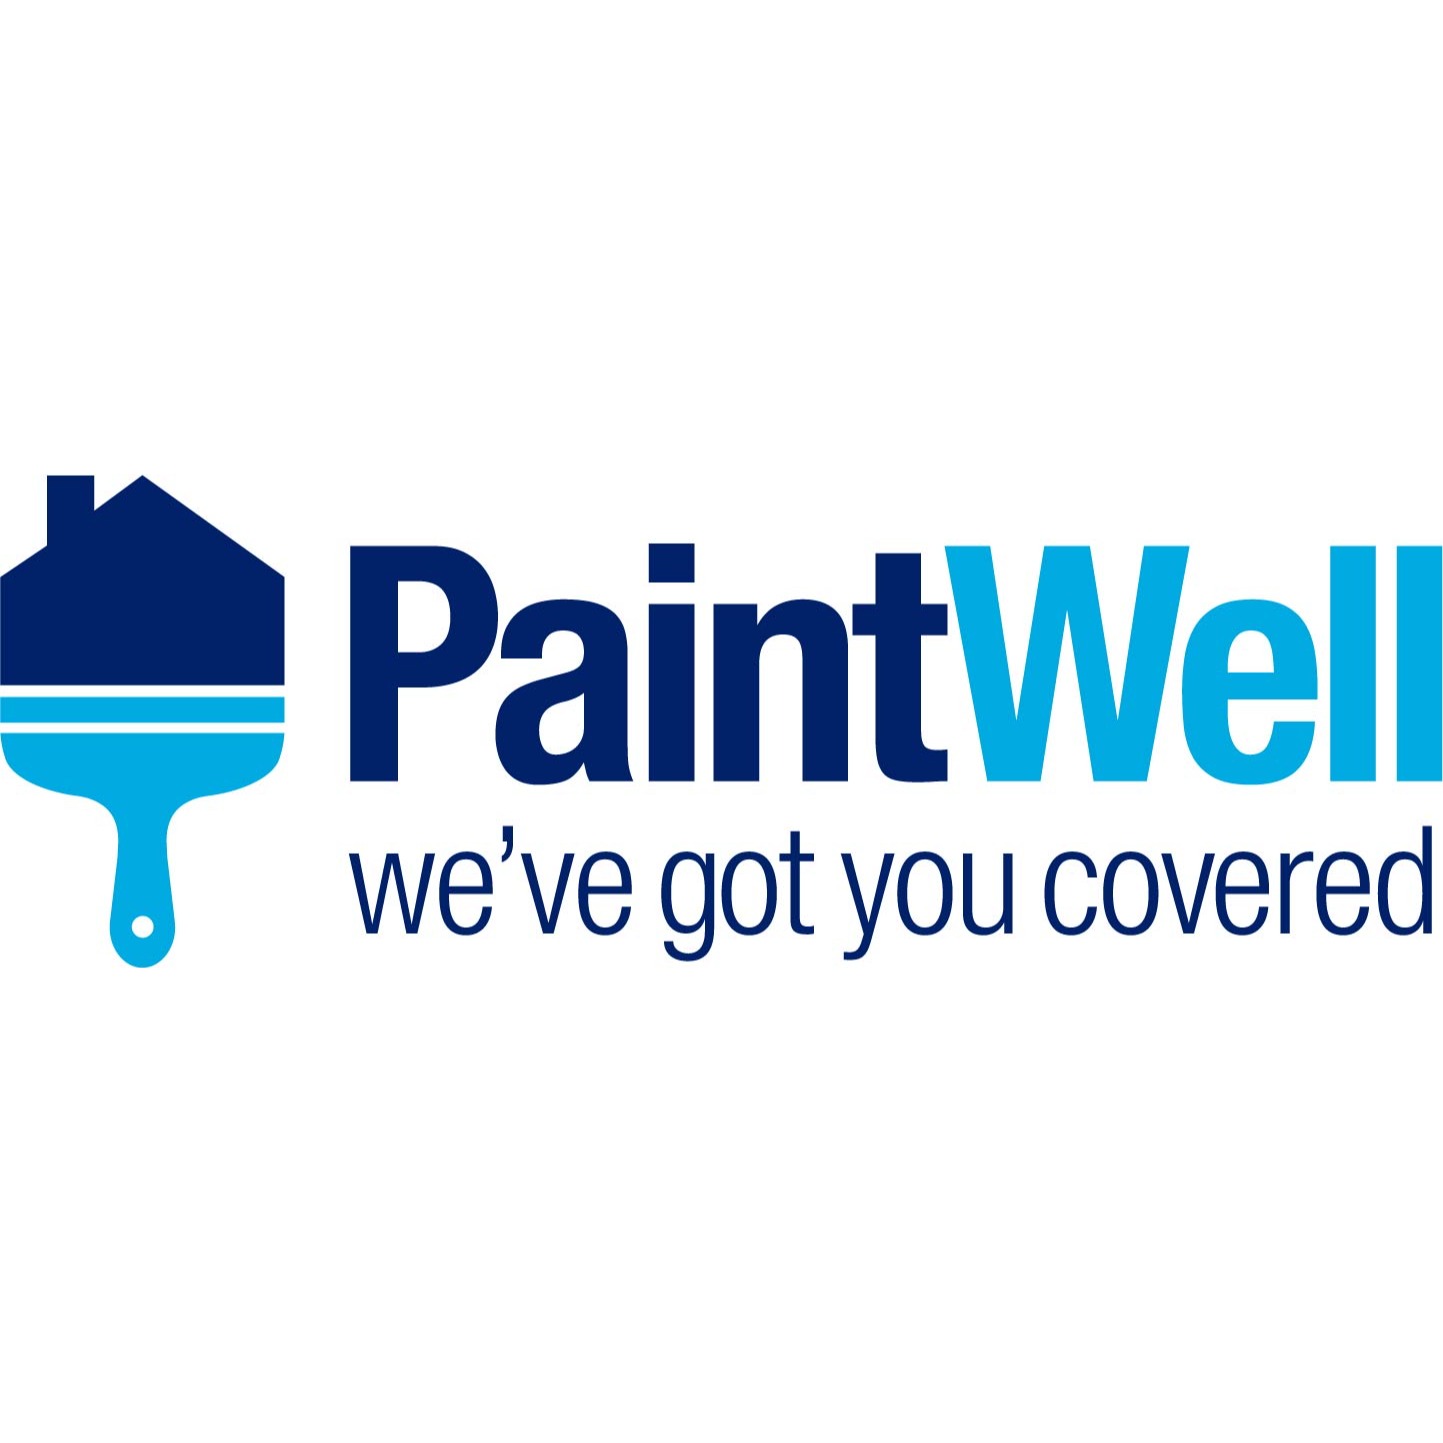 PaintWell, we've got you covered PaintWell Saffron Waldon Saffron Walden 01799 521150